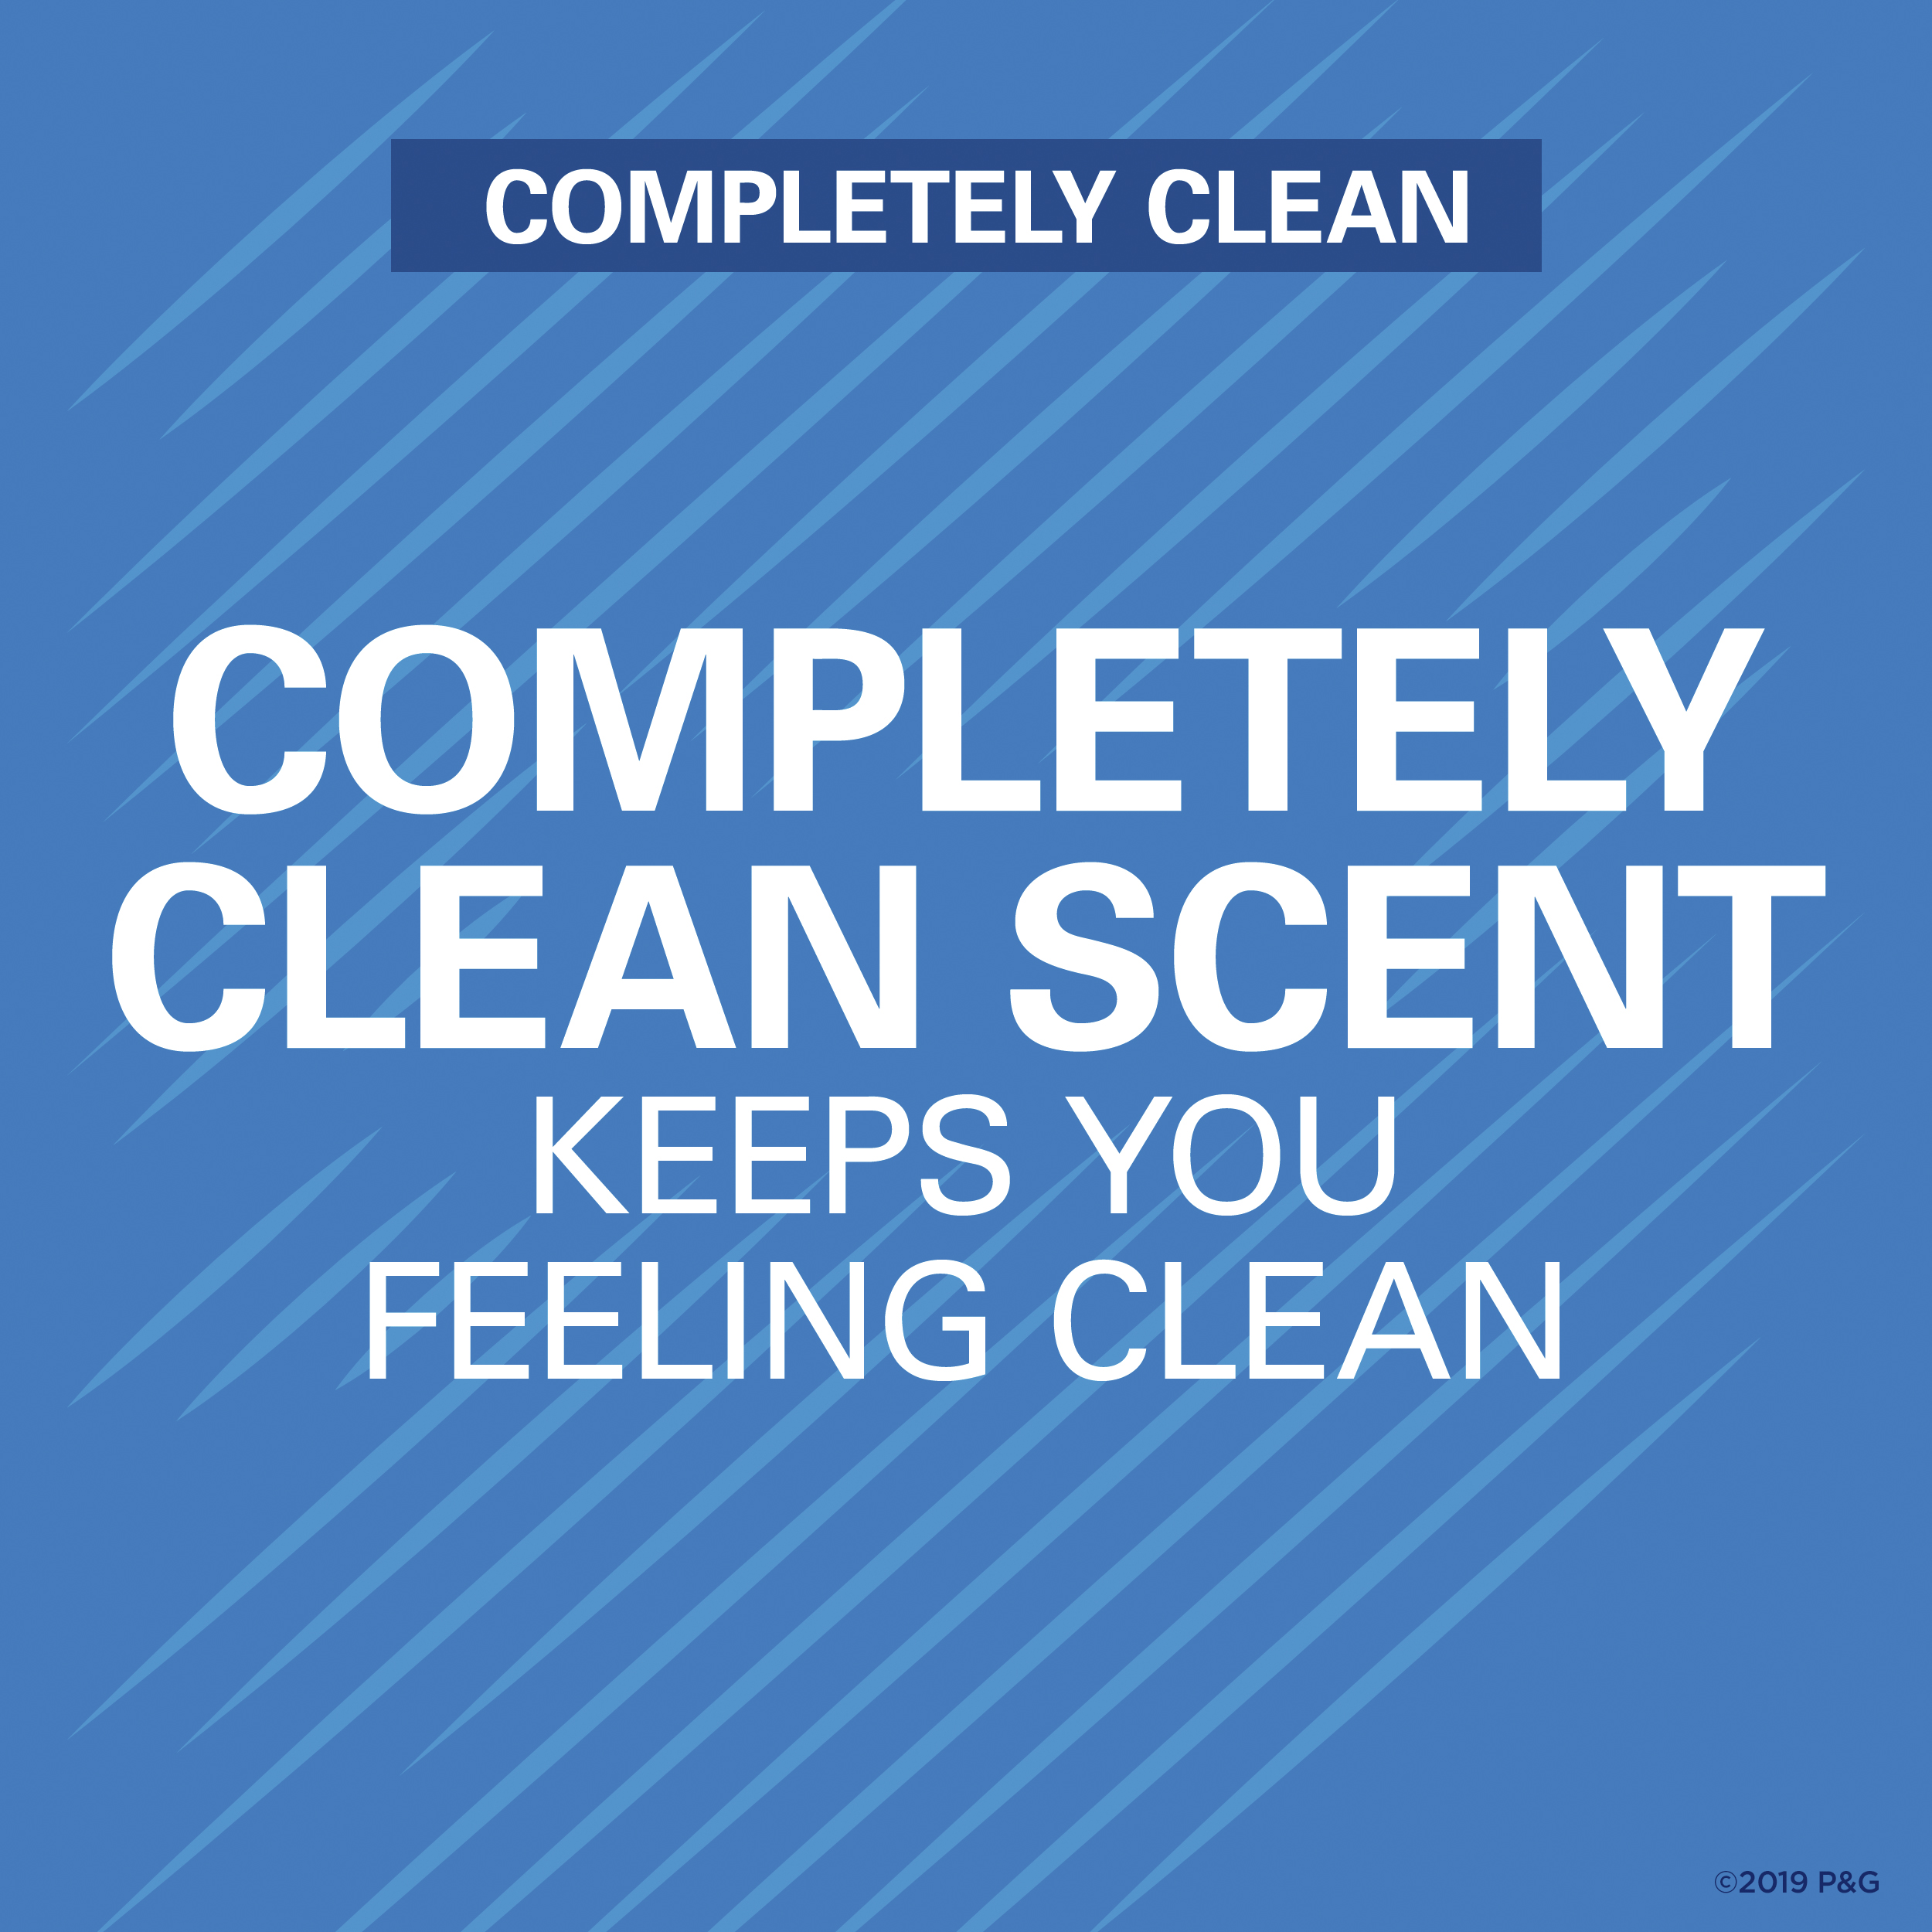 Secret Outlast Clear Gel Antiperspirant Deodorant for Women Completely Clean, 3.4 oz - image 5 of 10